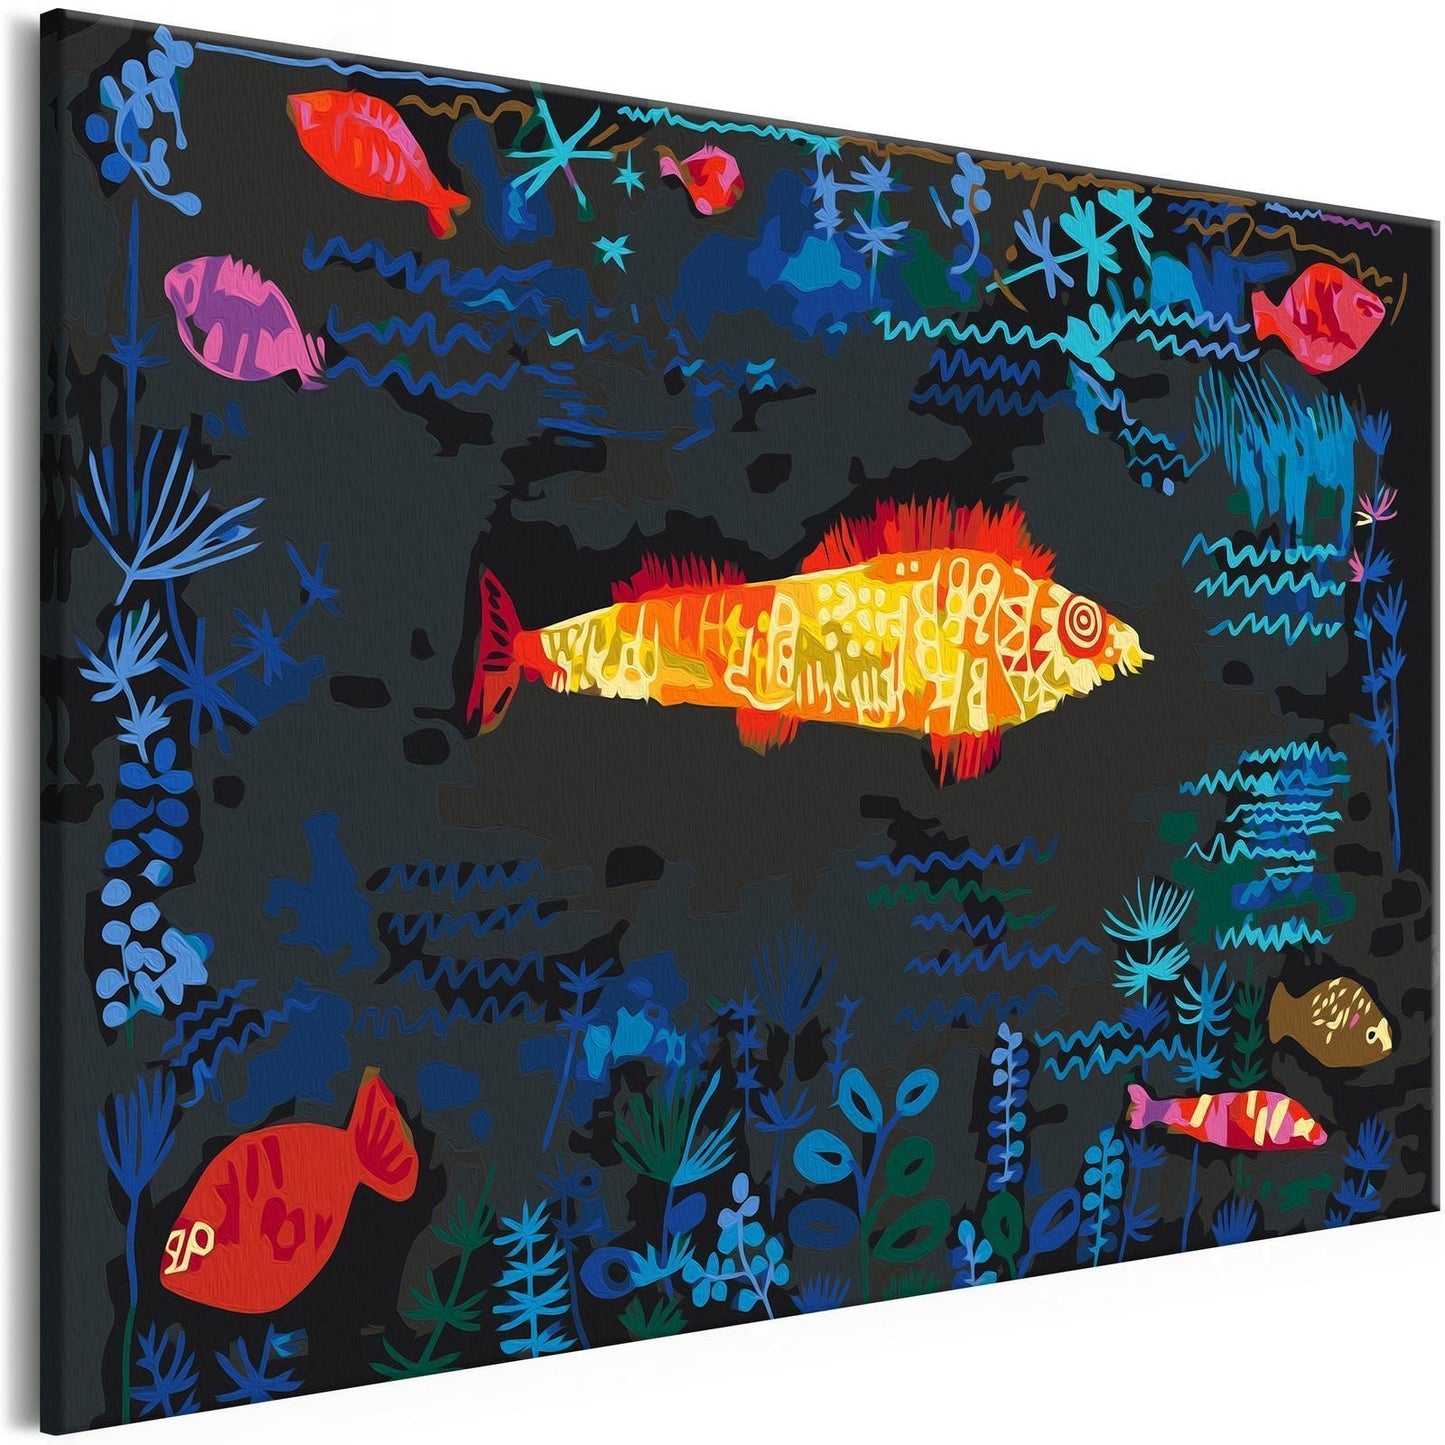 DIY Canvas Painting - Paul Klee: Goldfish 